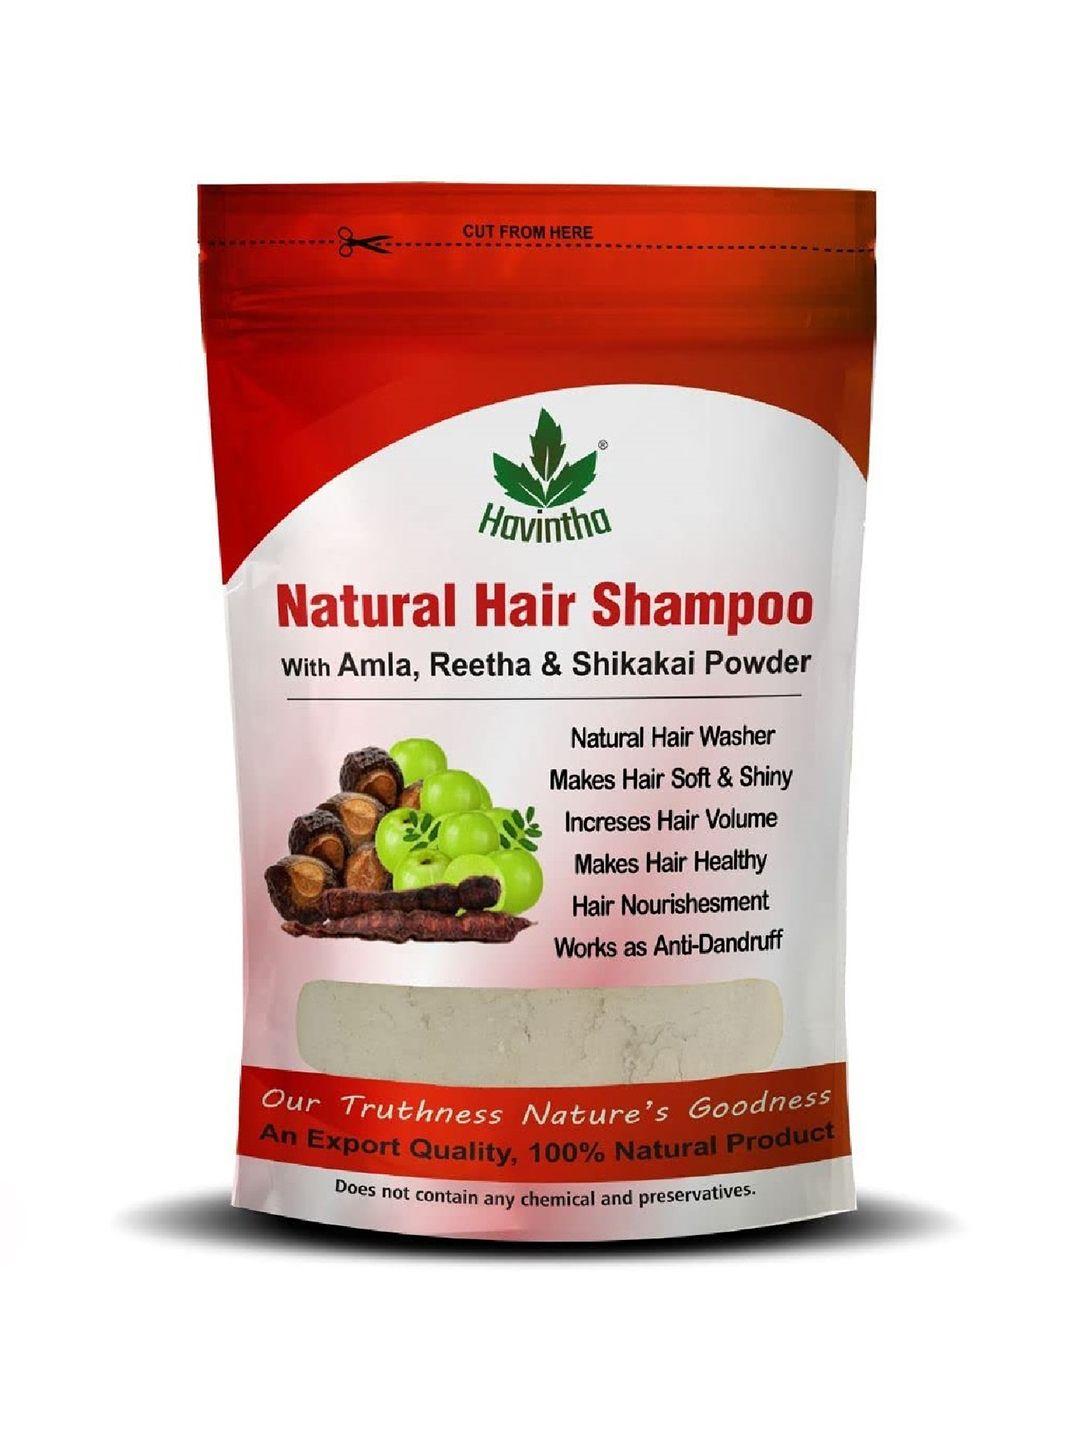 havintha green natural hair shampoo with amla, reetha and shikakai powder